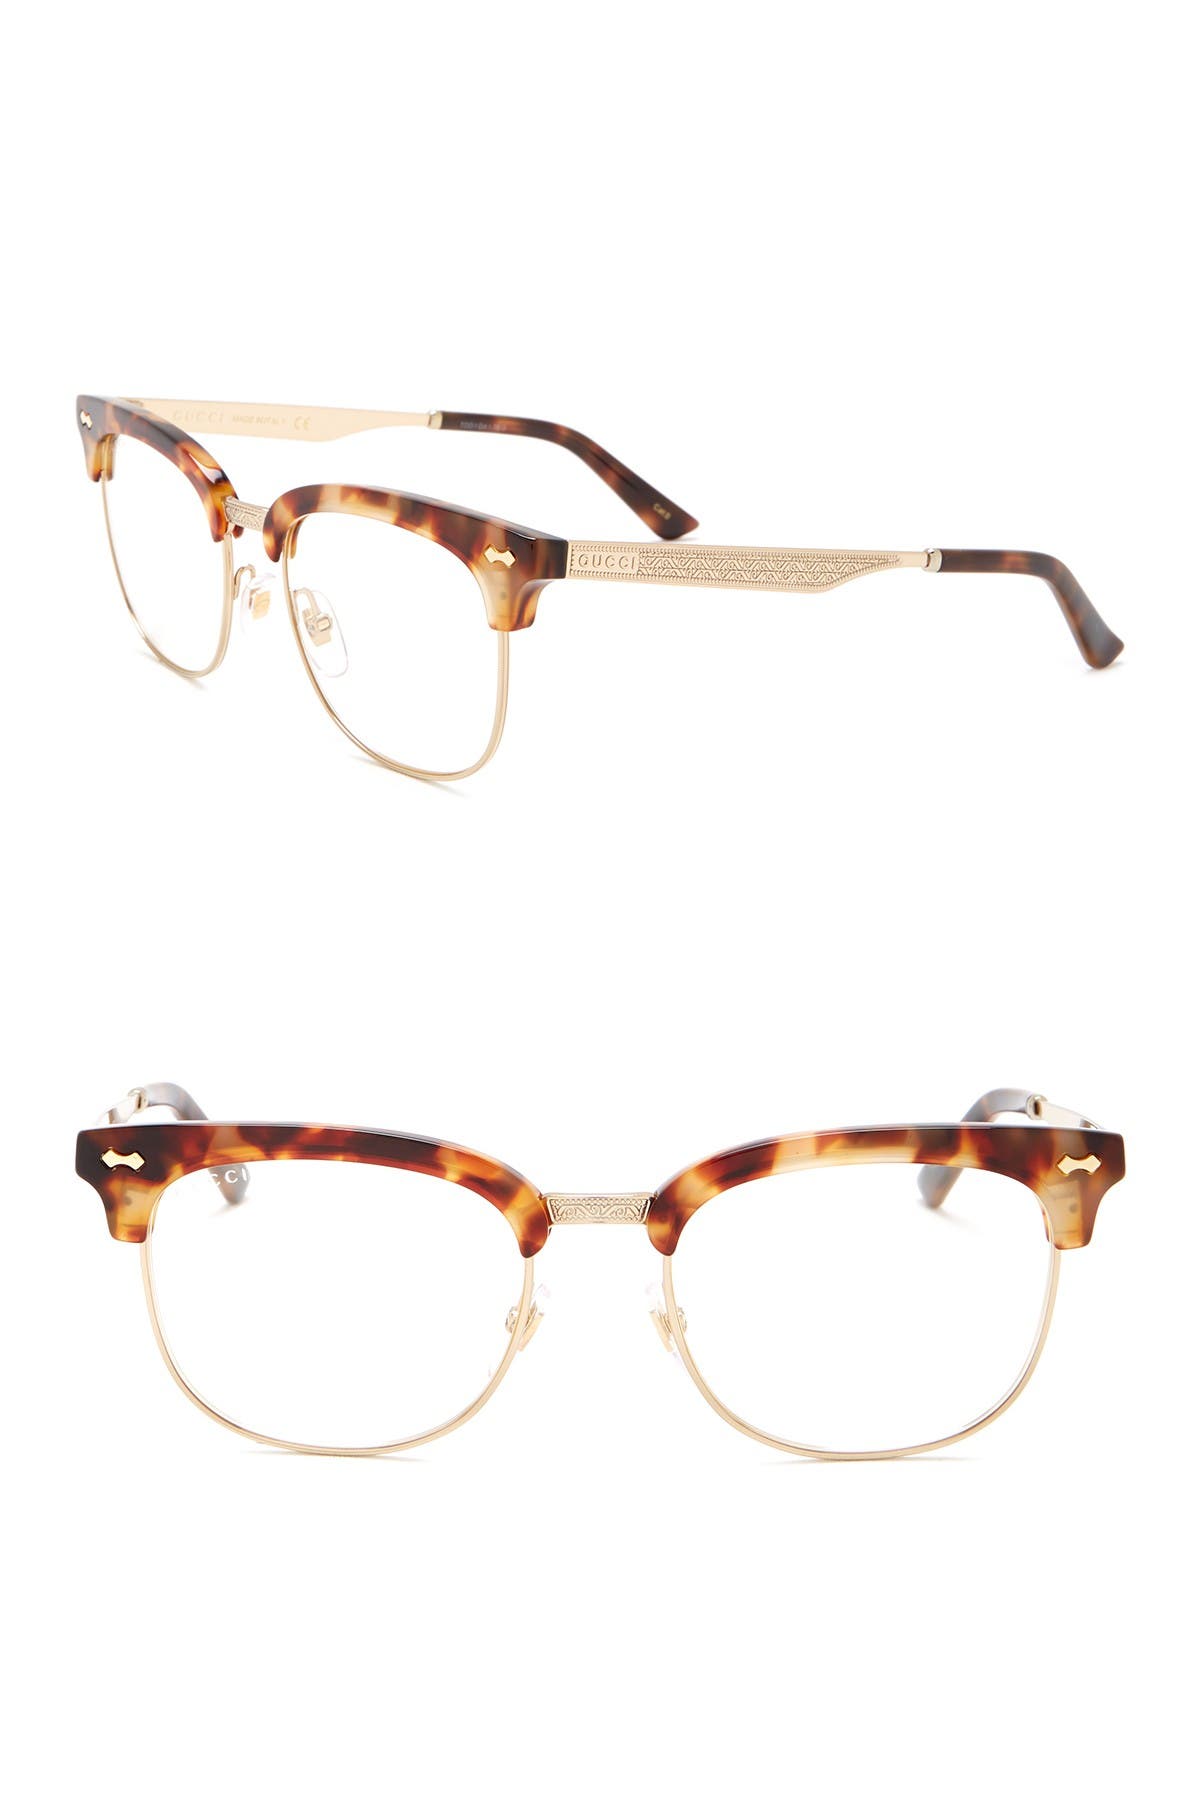 gucci clubmaster eyeglasses